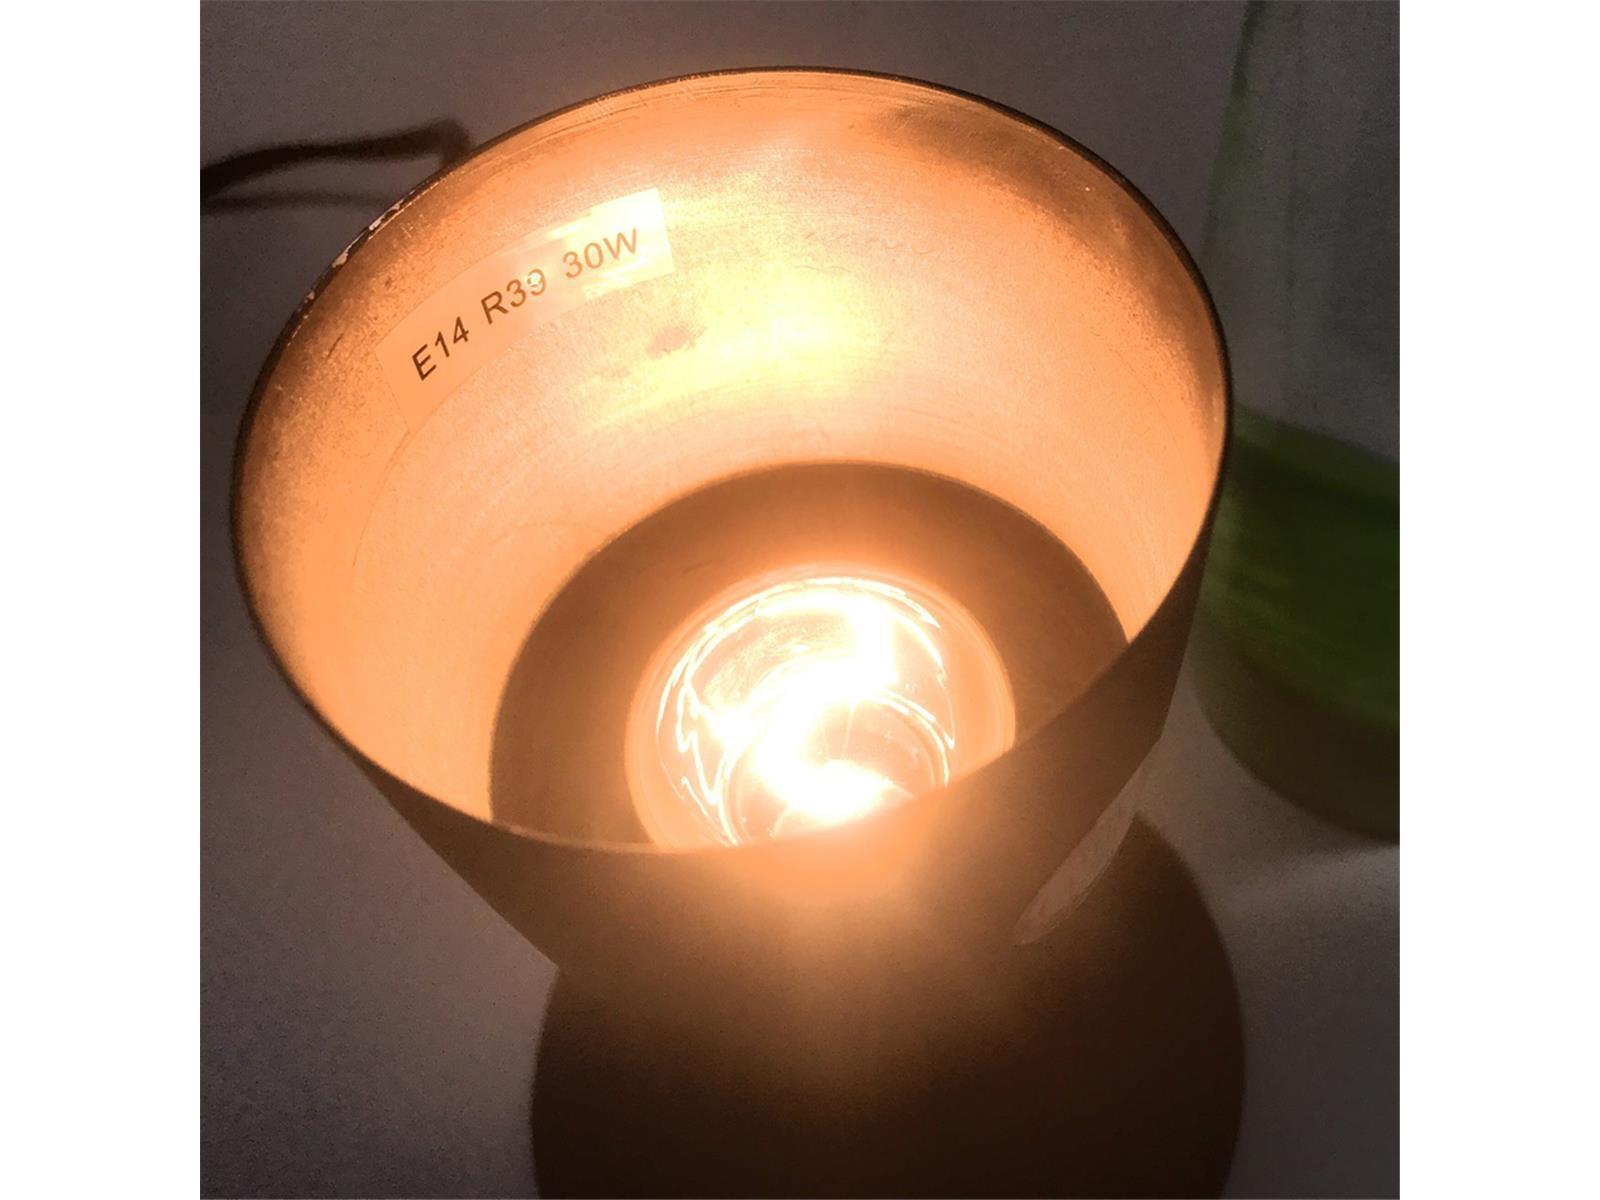 Lavalampen-Ersatzlampe "CTL"E14, 30W, R39 #21468, 22260